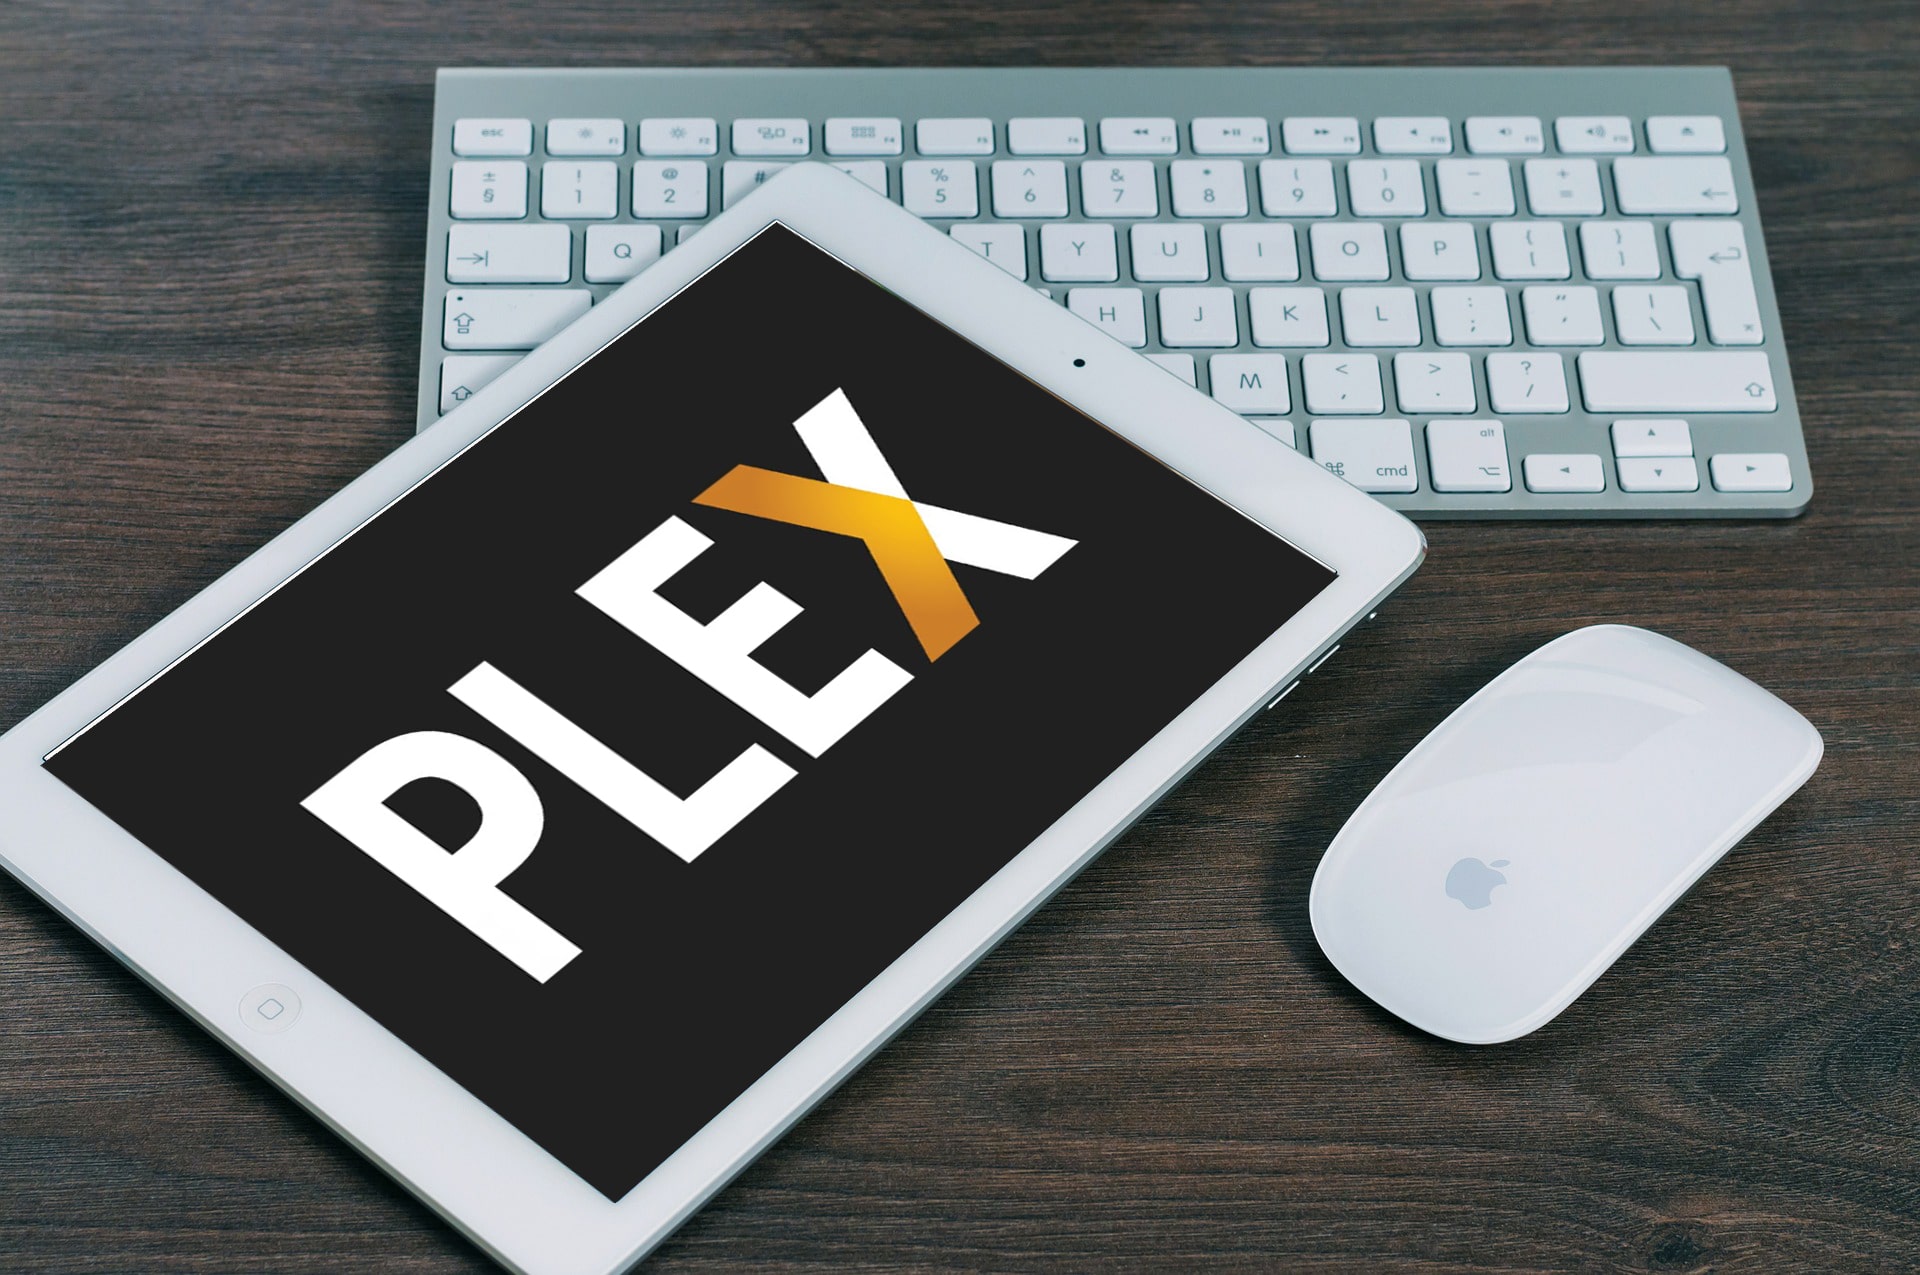 best plex media server 2017